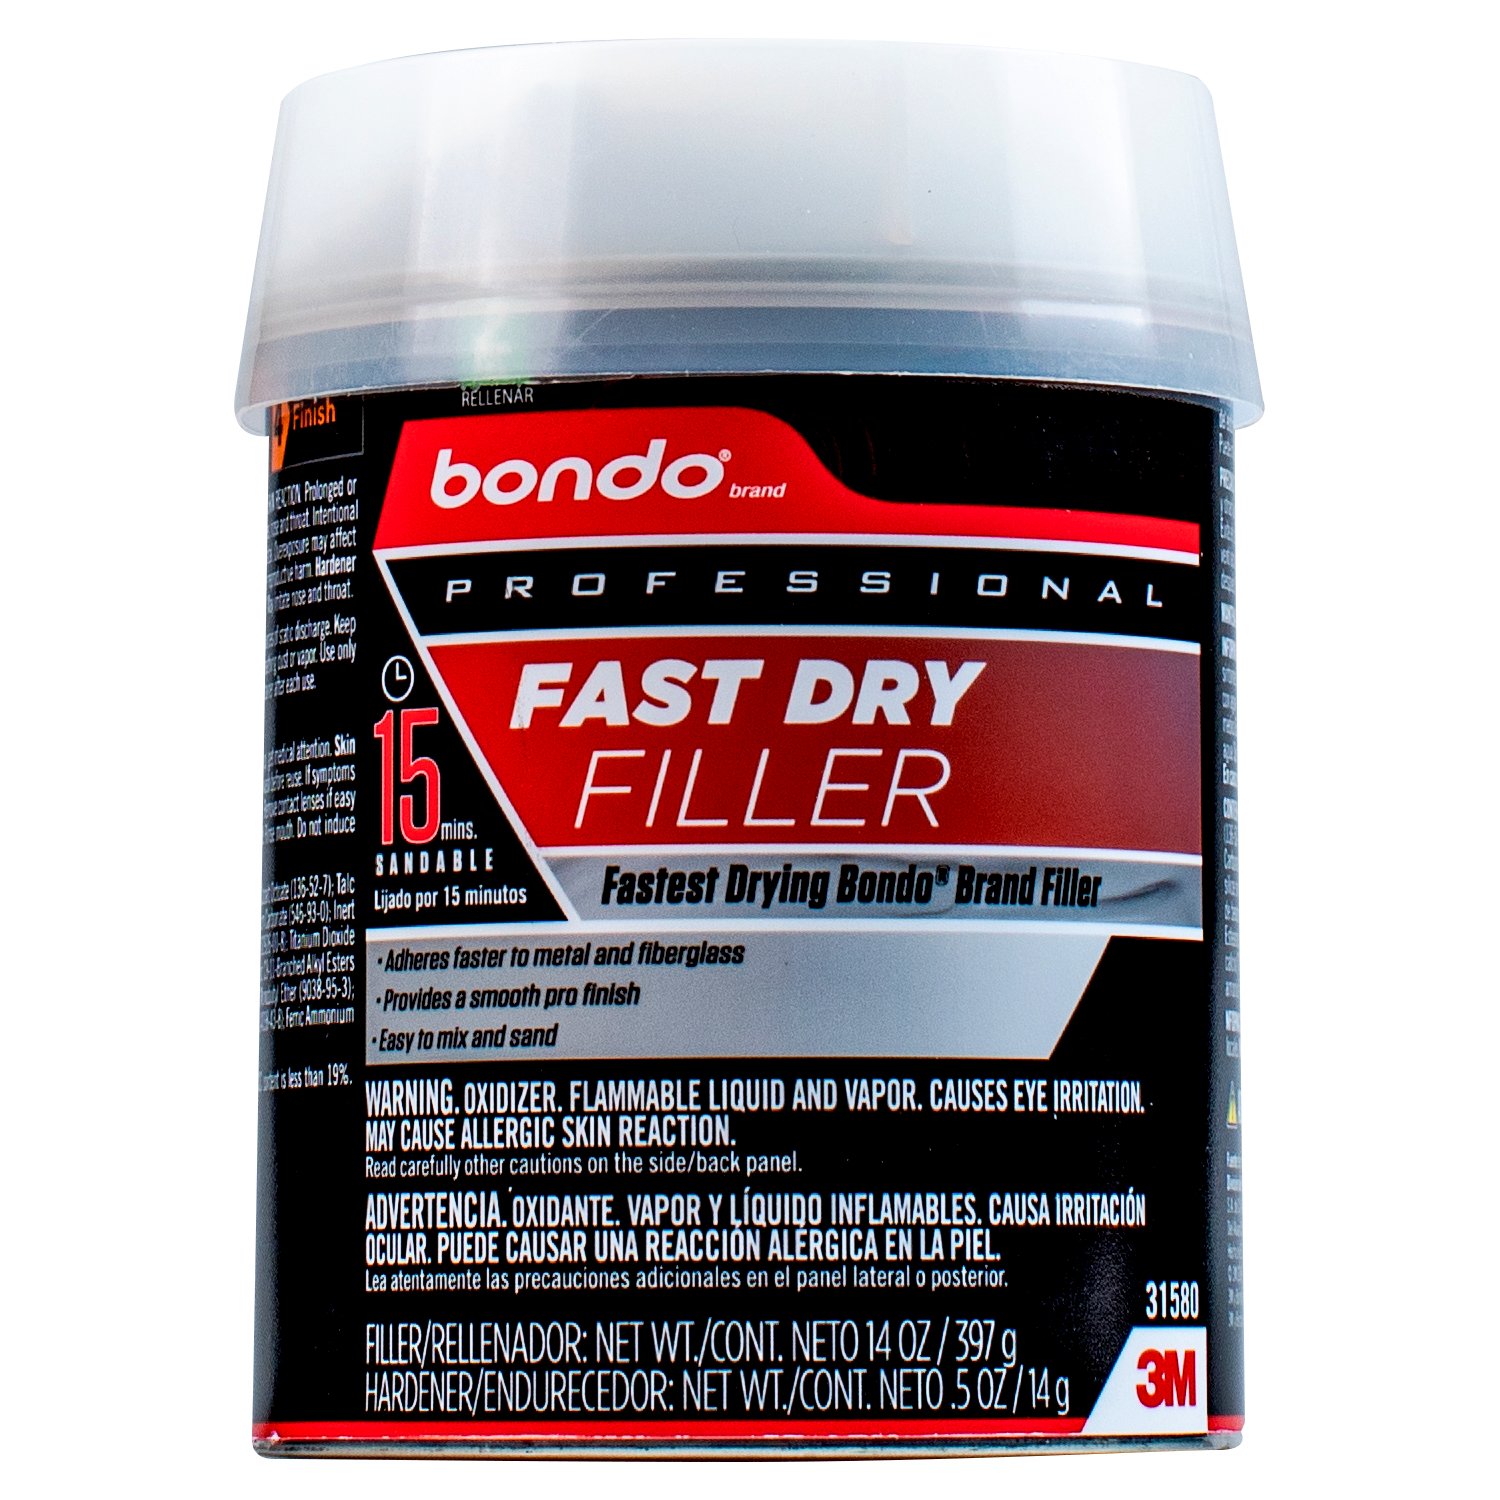 7100190862 - Bondo Professional Fast Dry Filler, 31580, Pint, 12 per case